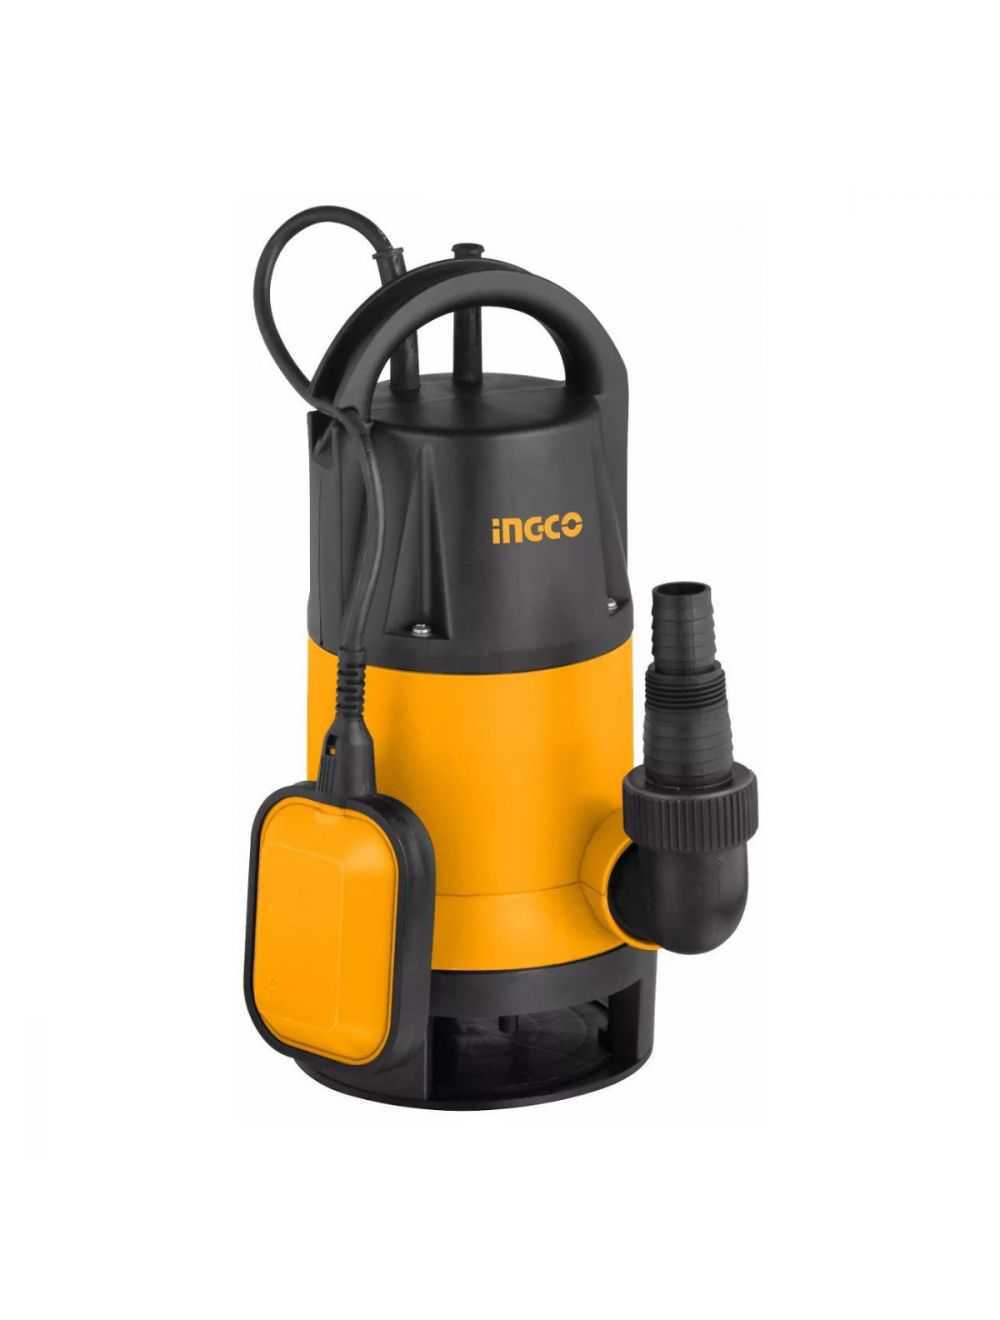 Ingco submersible pump 1hp